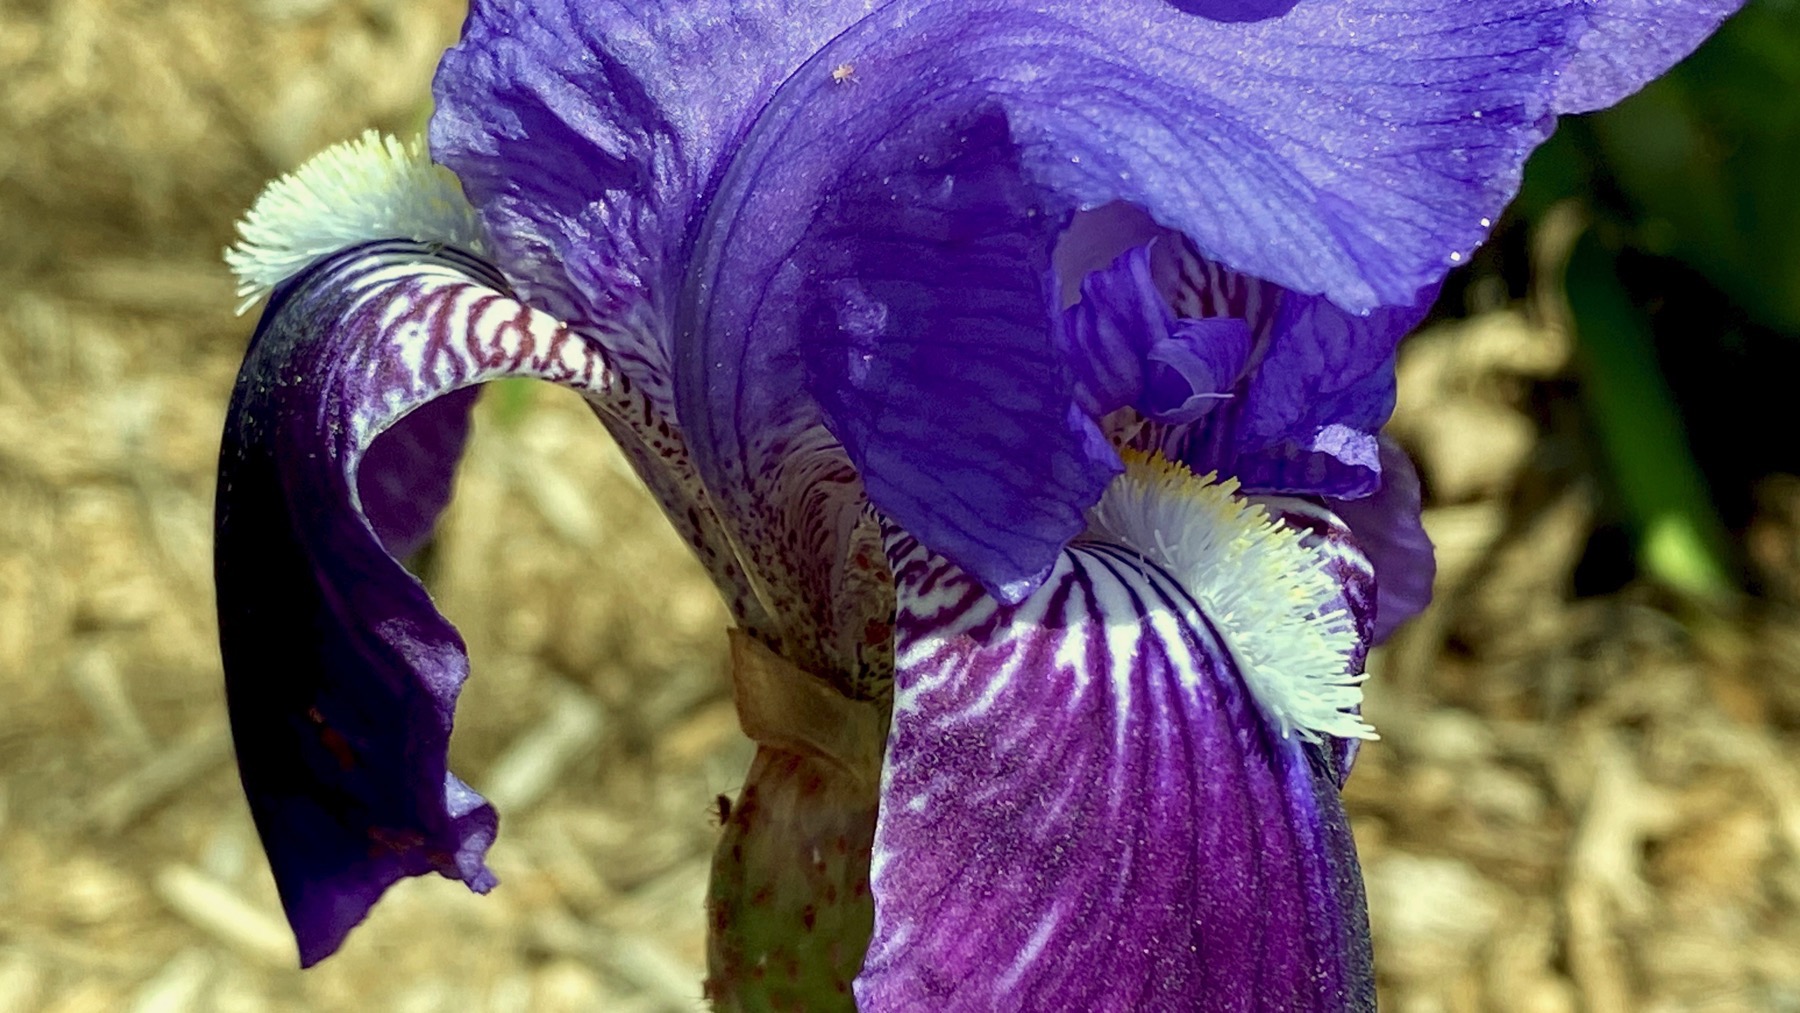 More iris